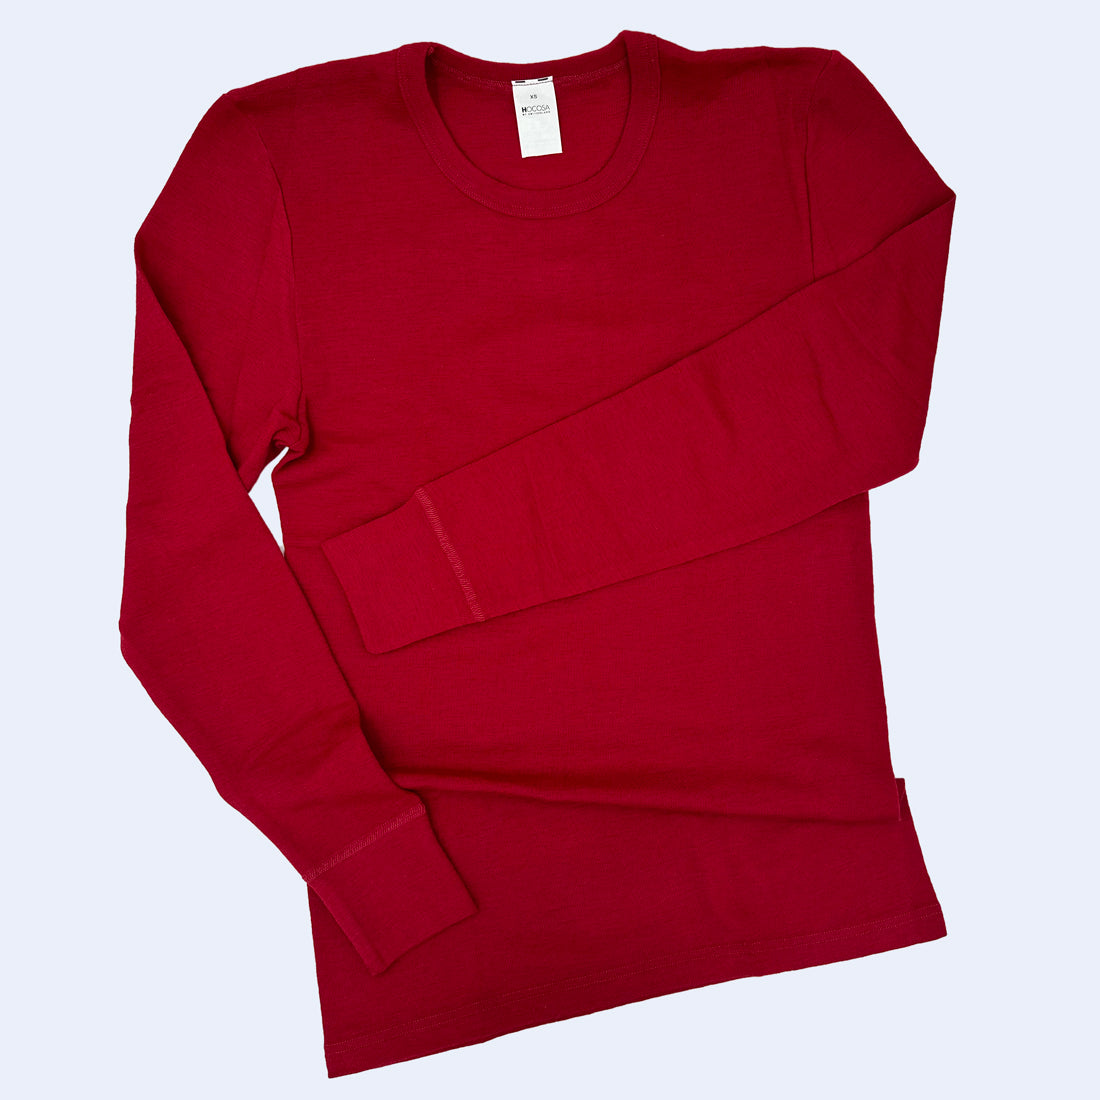 HOCOSA "Sport" Organic Merino Wool Long-Sleeve Undershirt for Men or Women, Round-neck, in Red